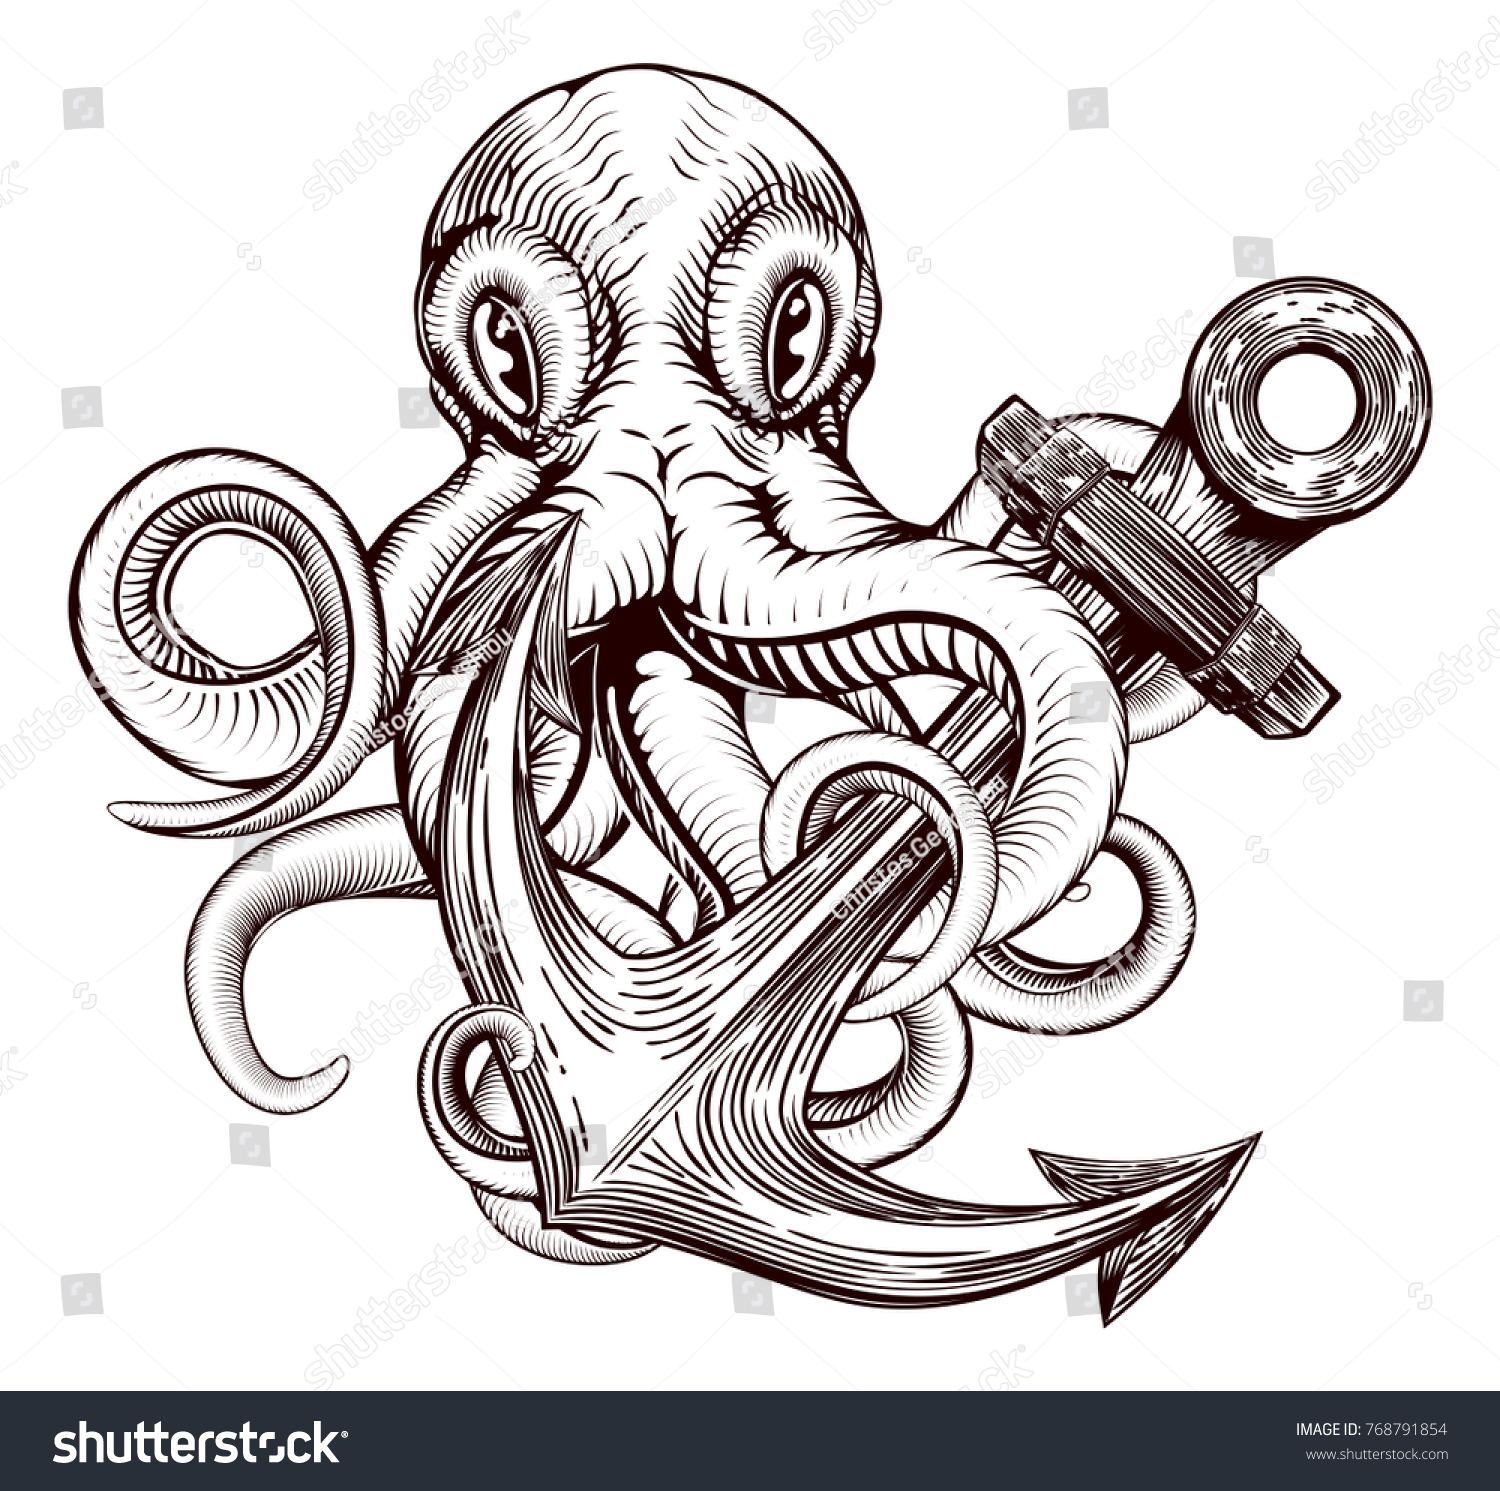 385 Vintage octopus navy Images, Stock Photos & Vectors | Shutterstock